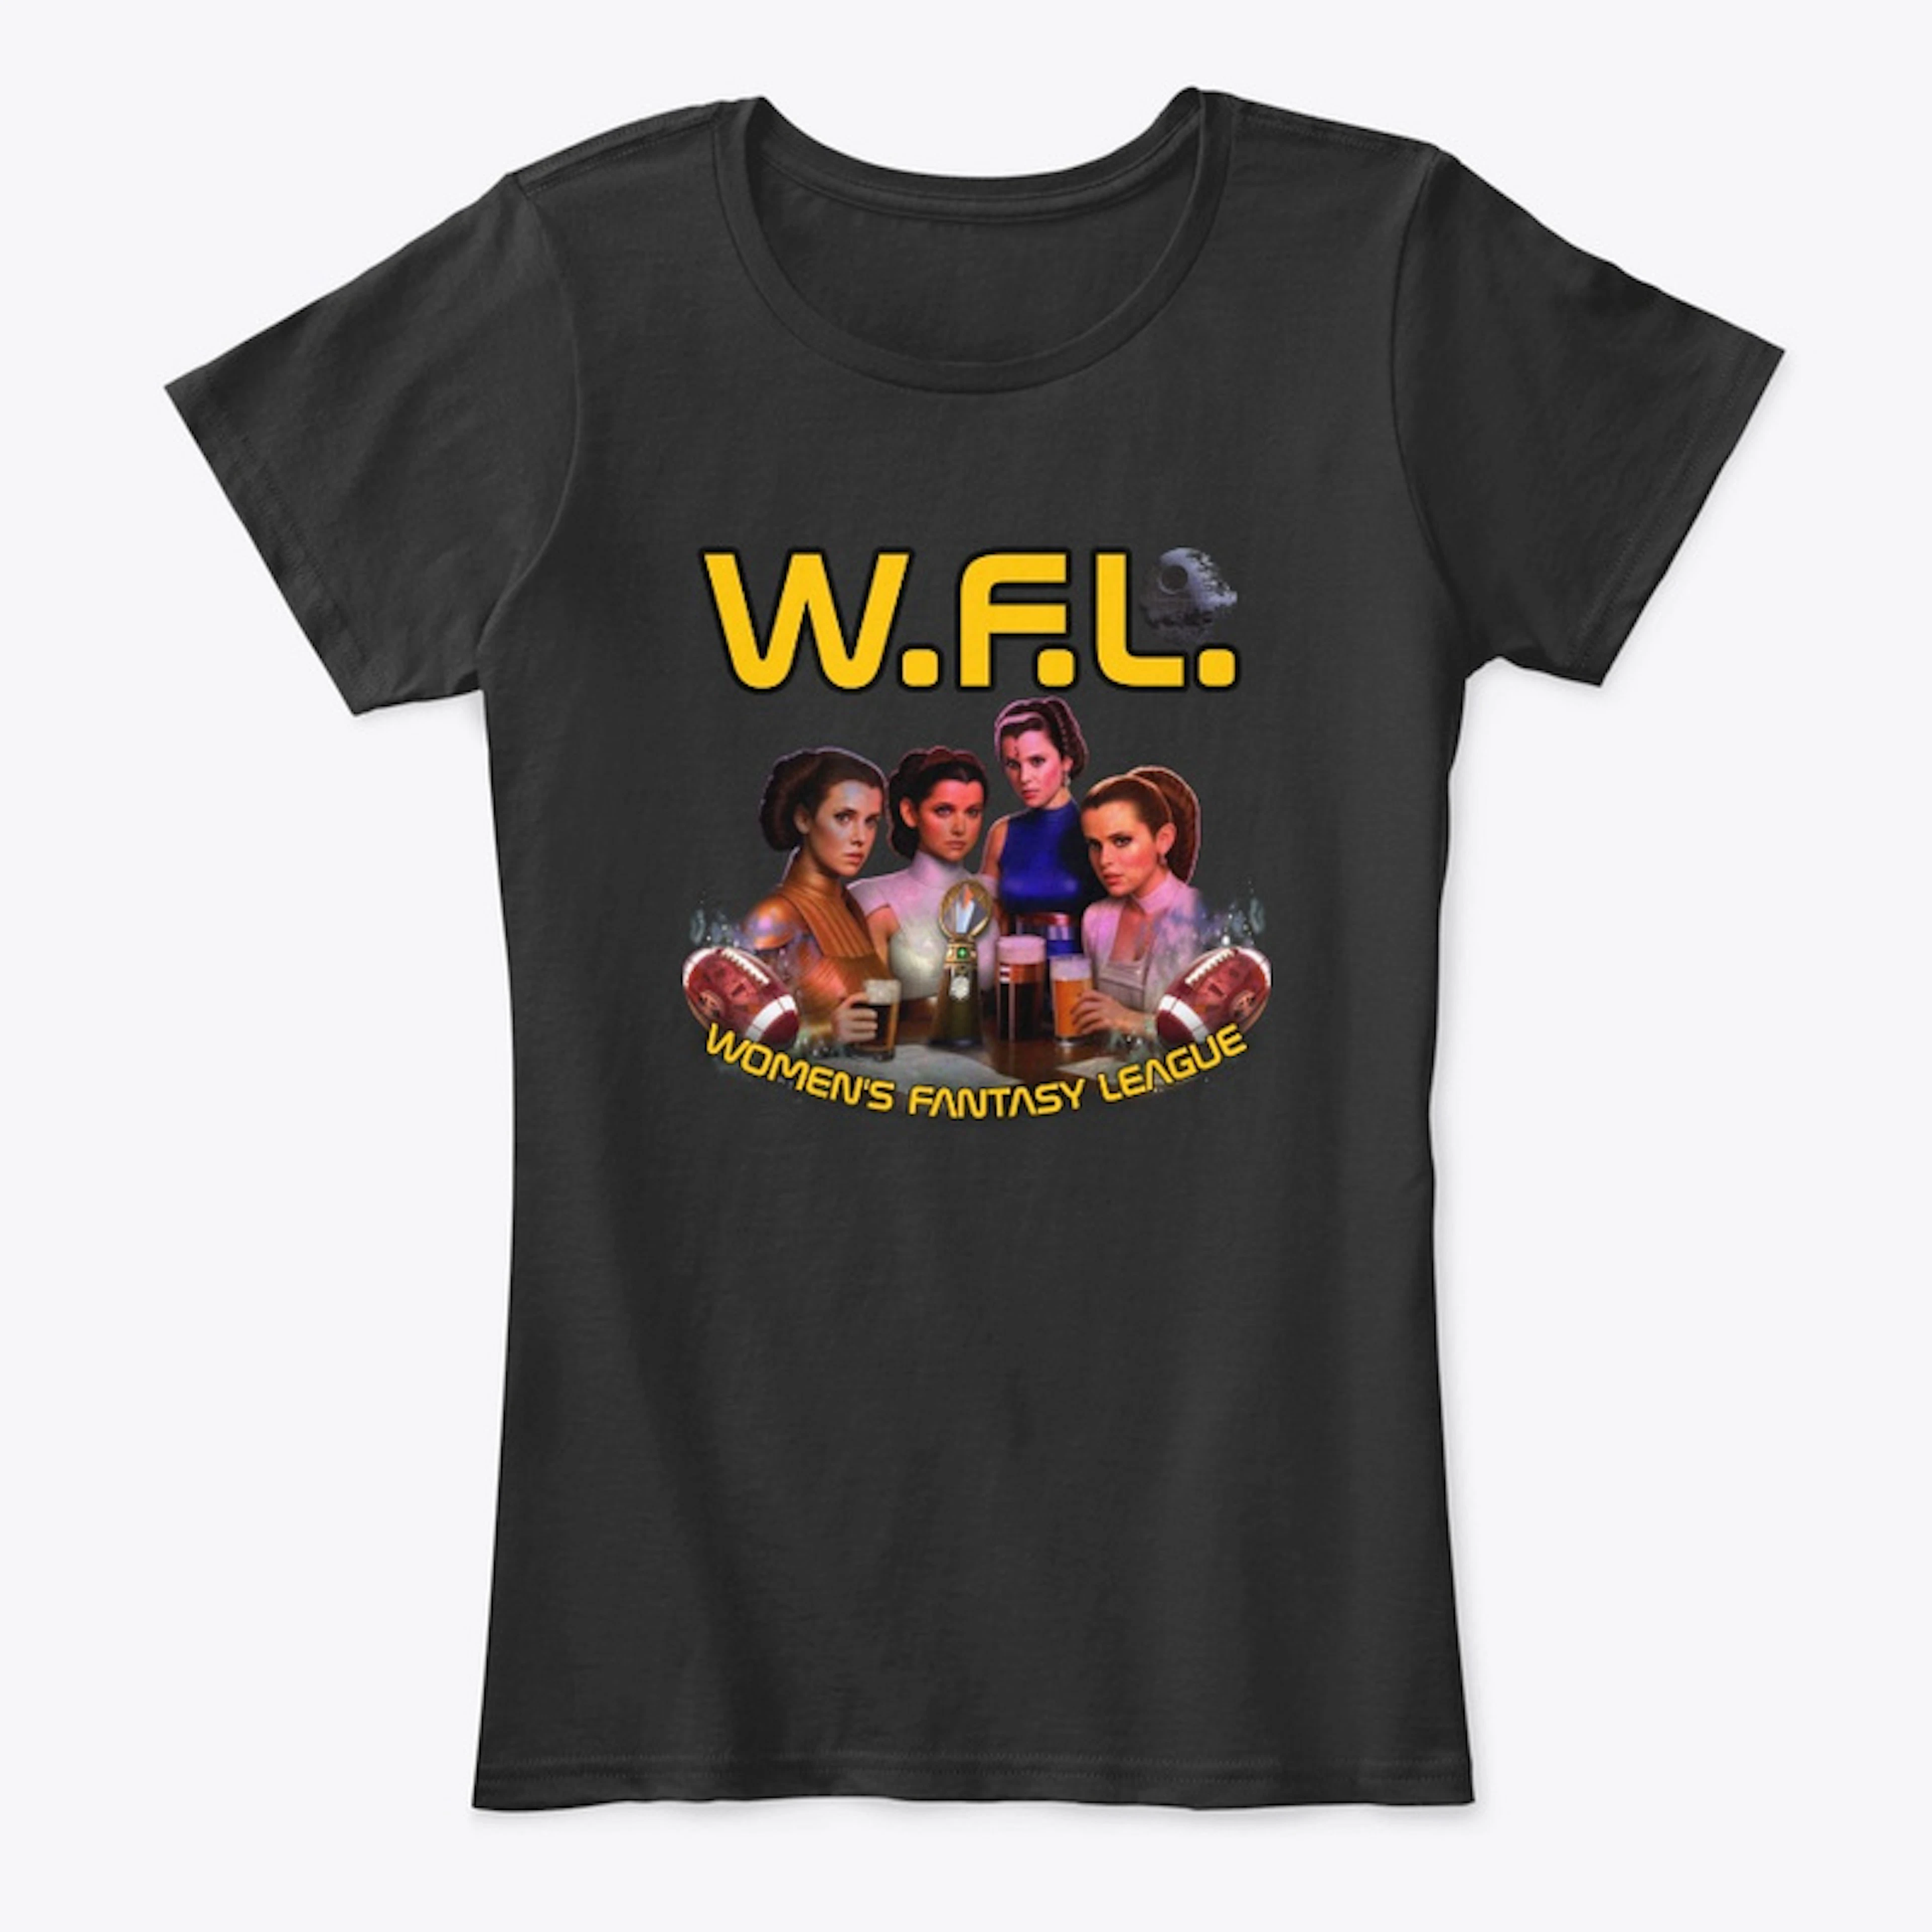 WFL - Women's Fantasy League